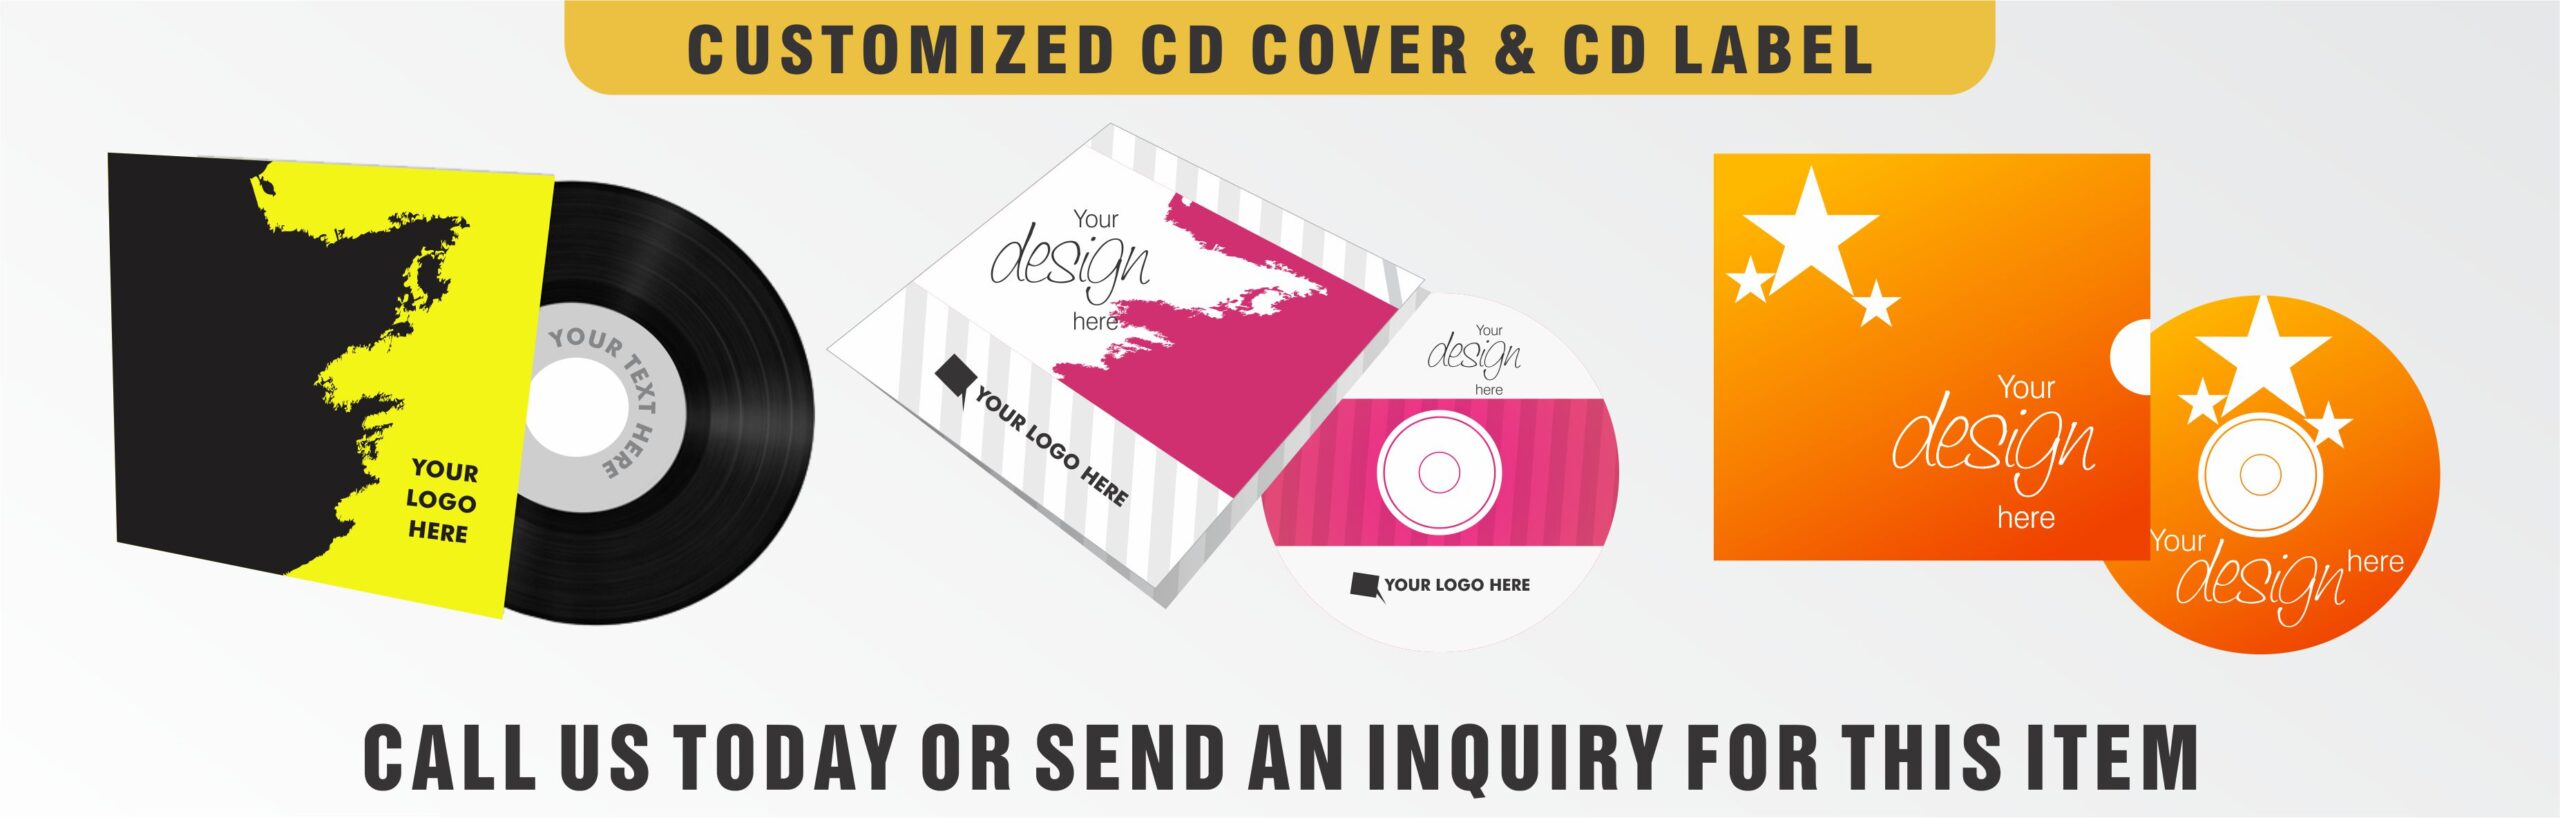 CD Cover & CD Label